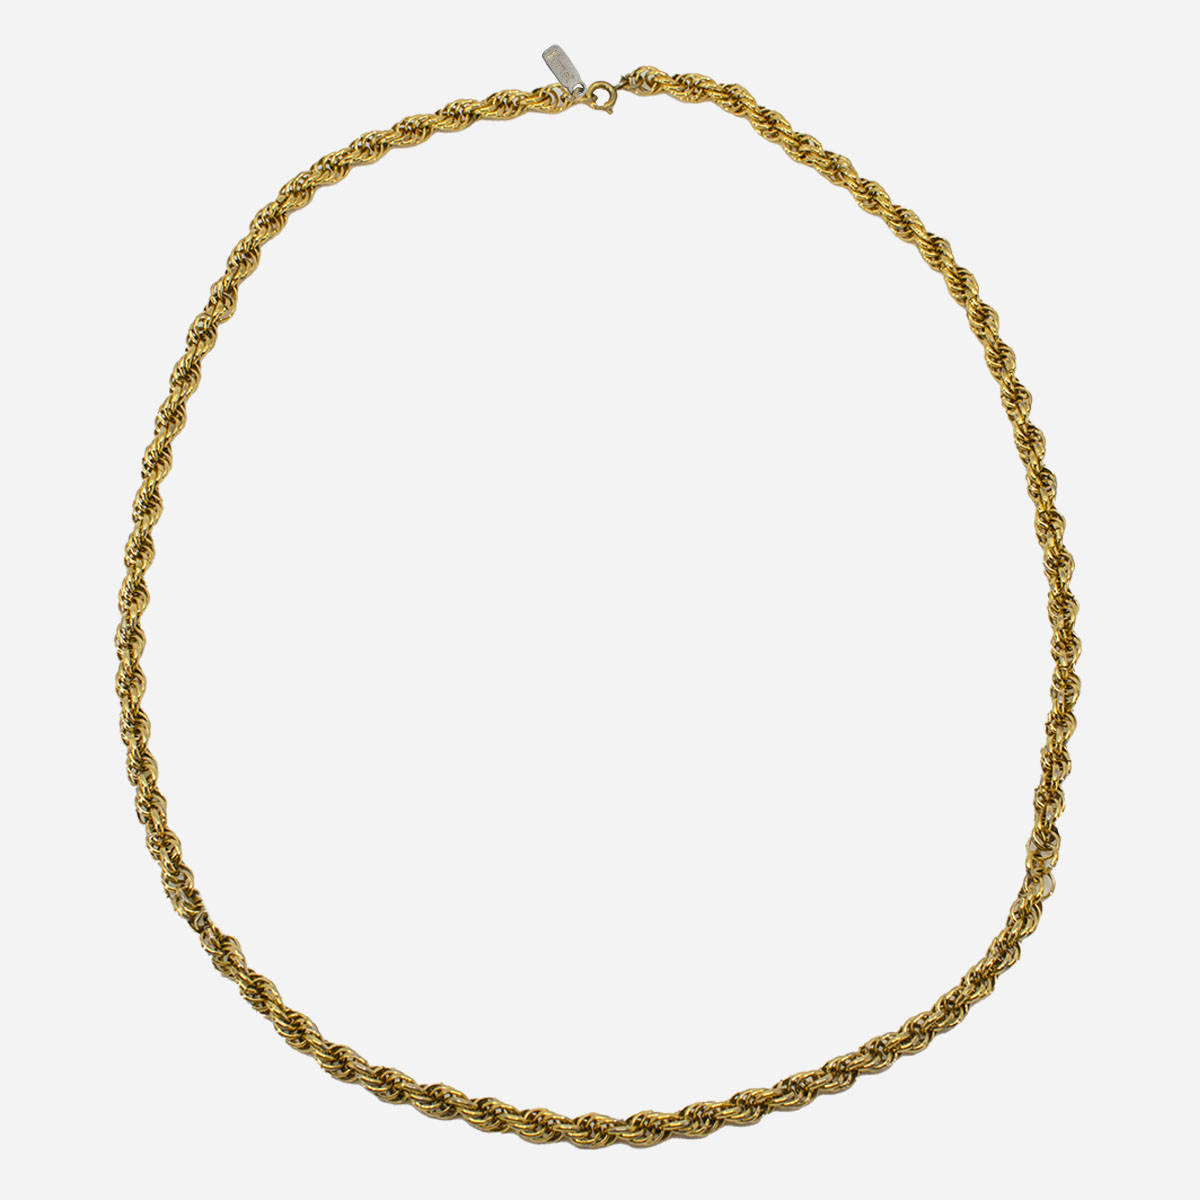 Monet gold chain necklace